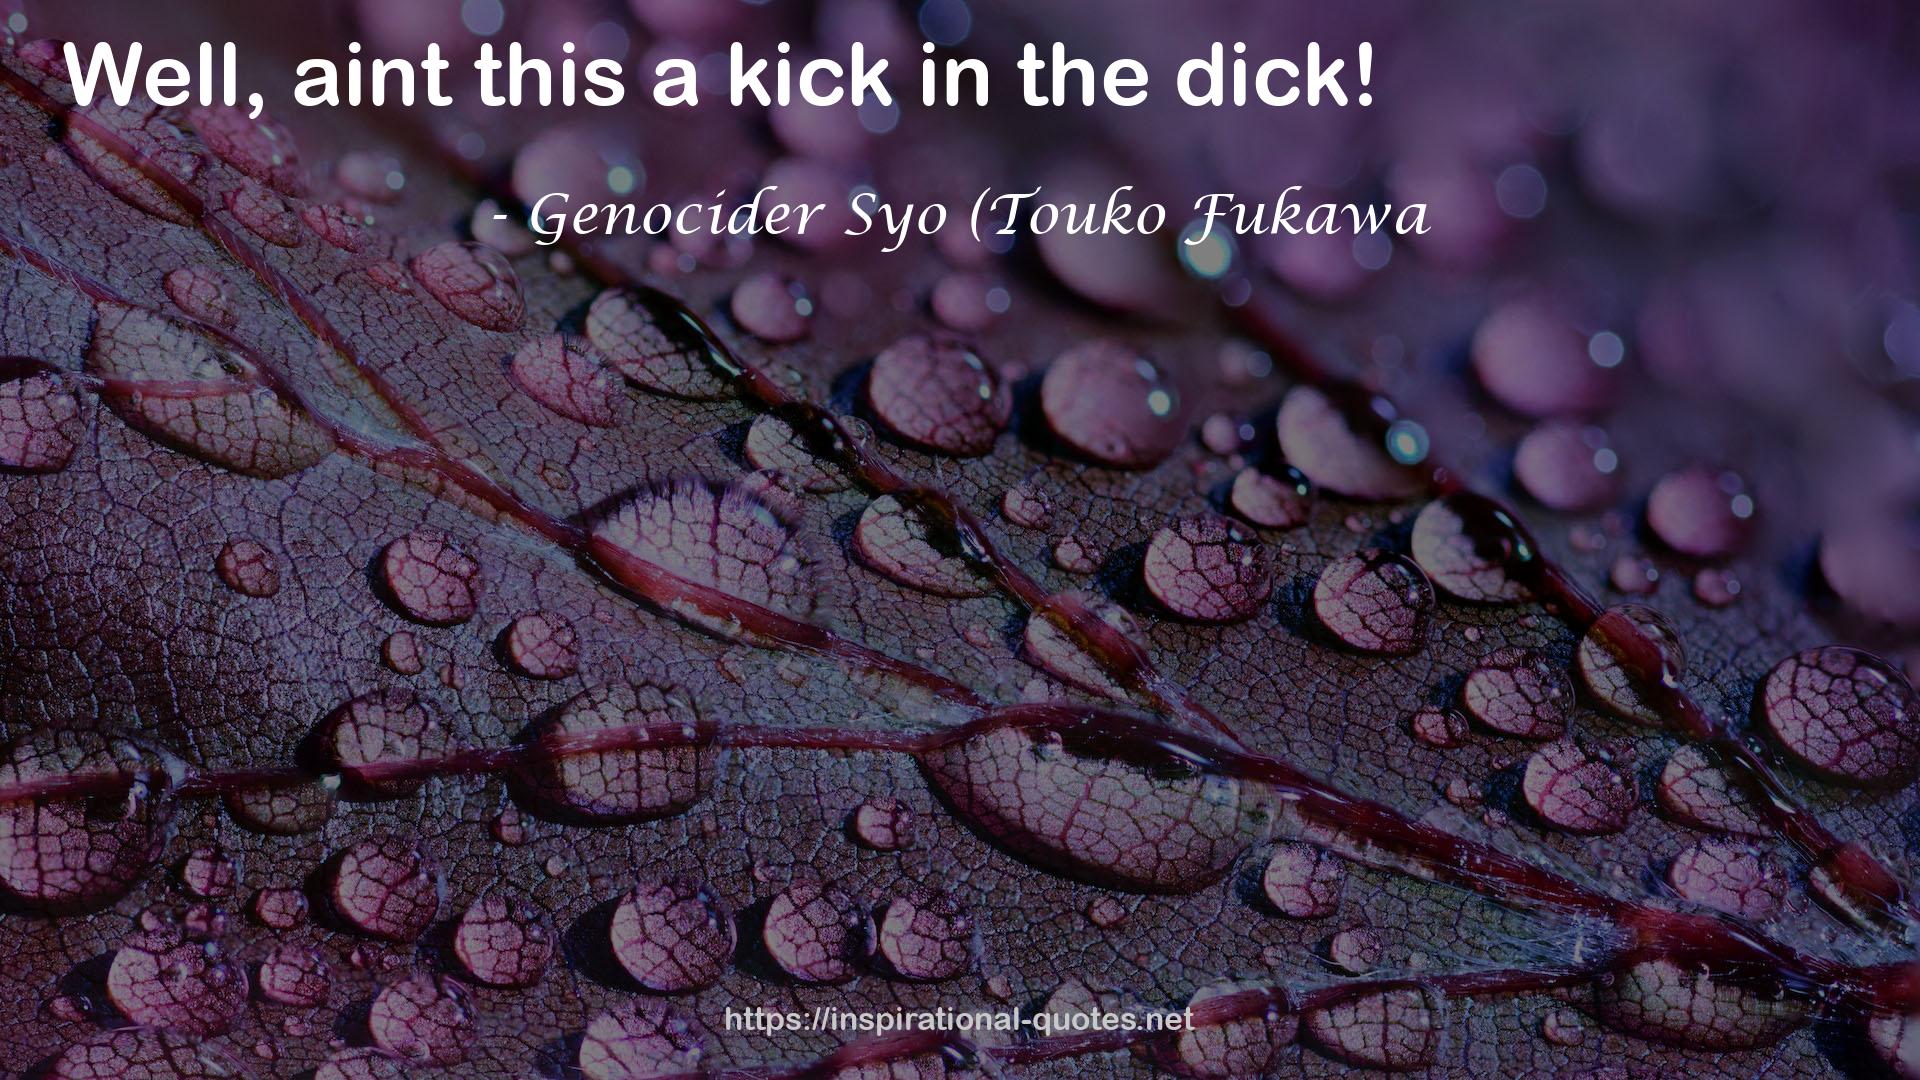 Genocider Syo (Touko Fukawa QUOTES